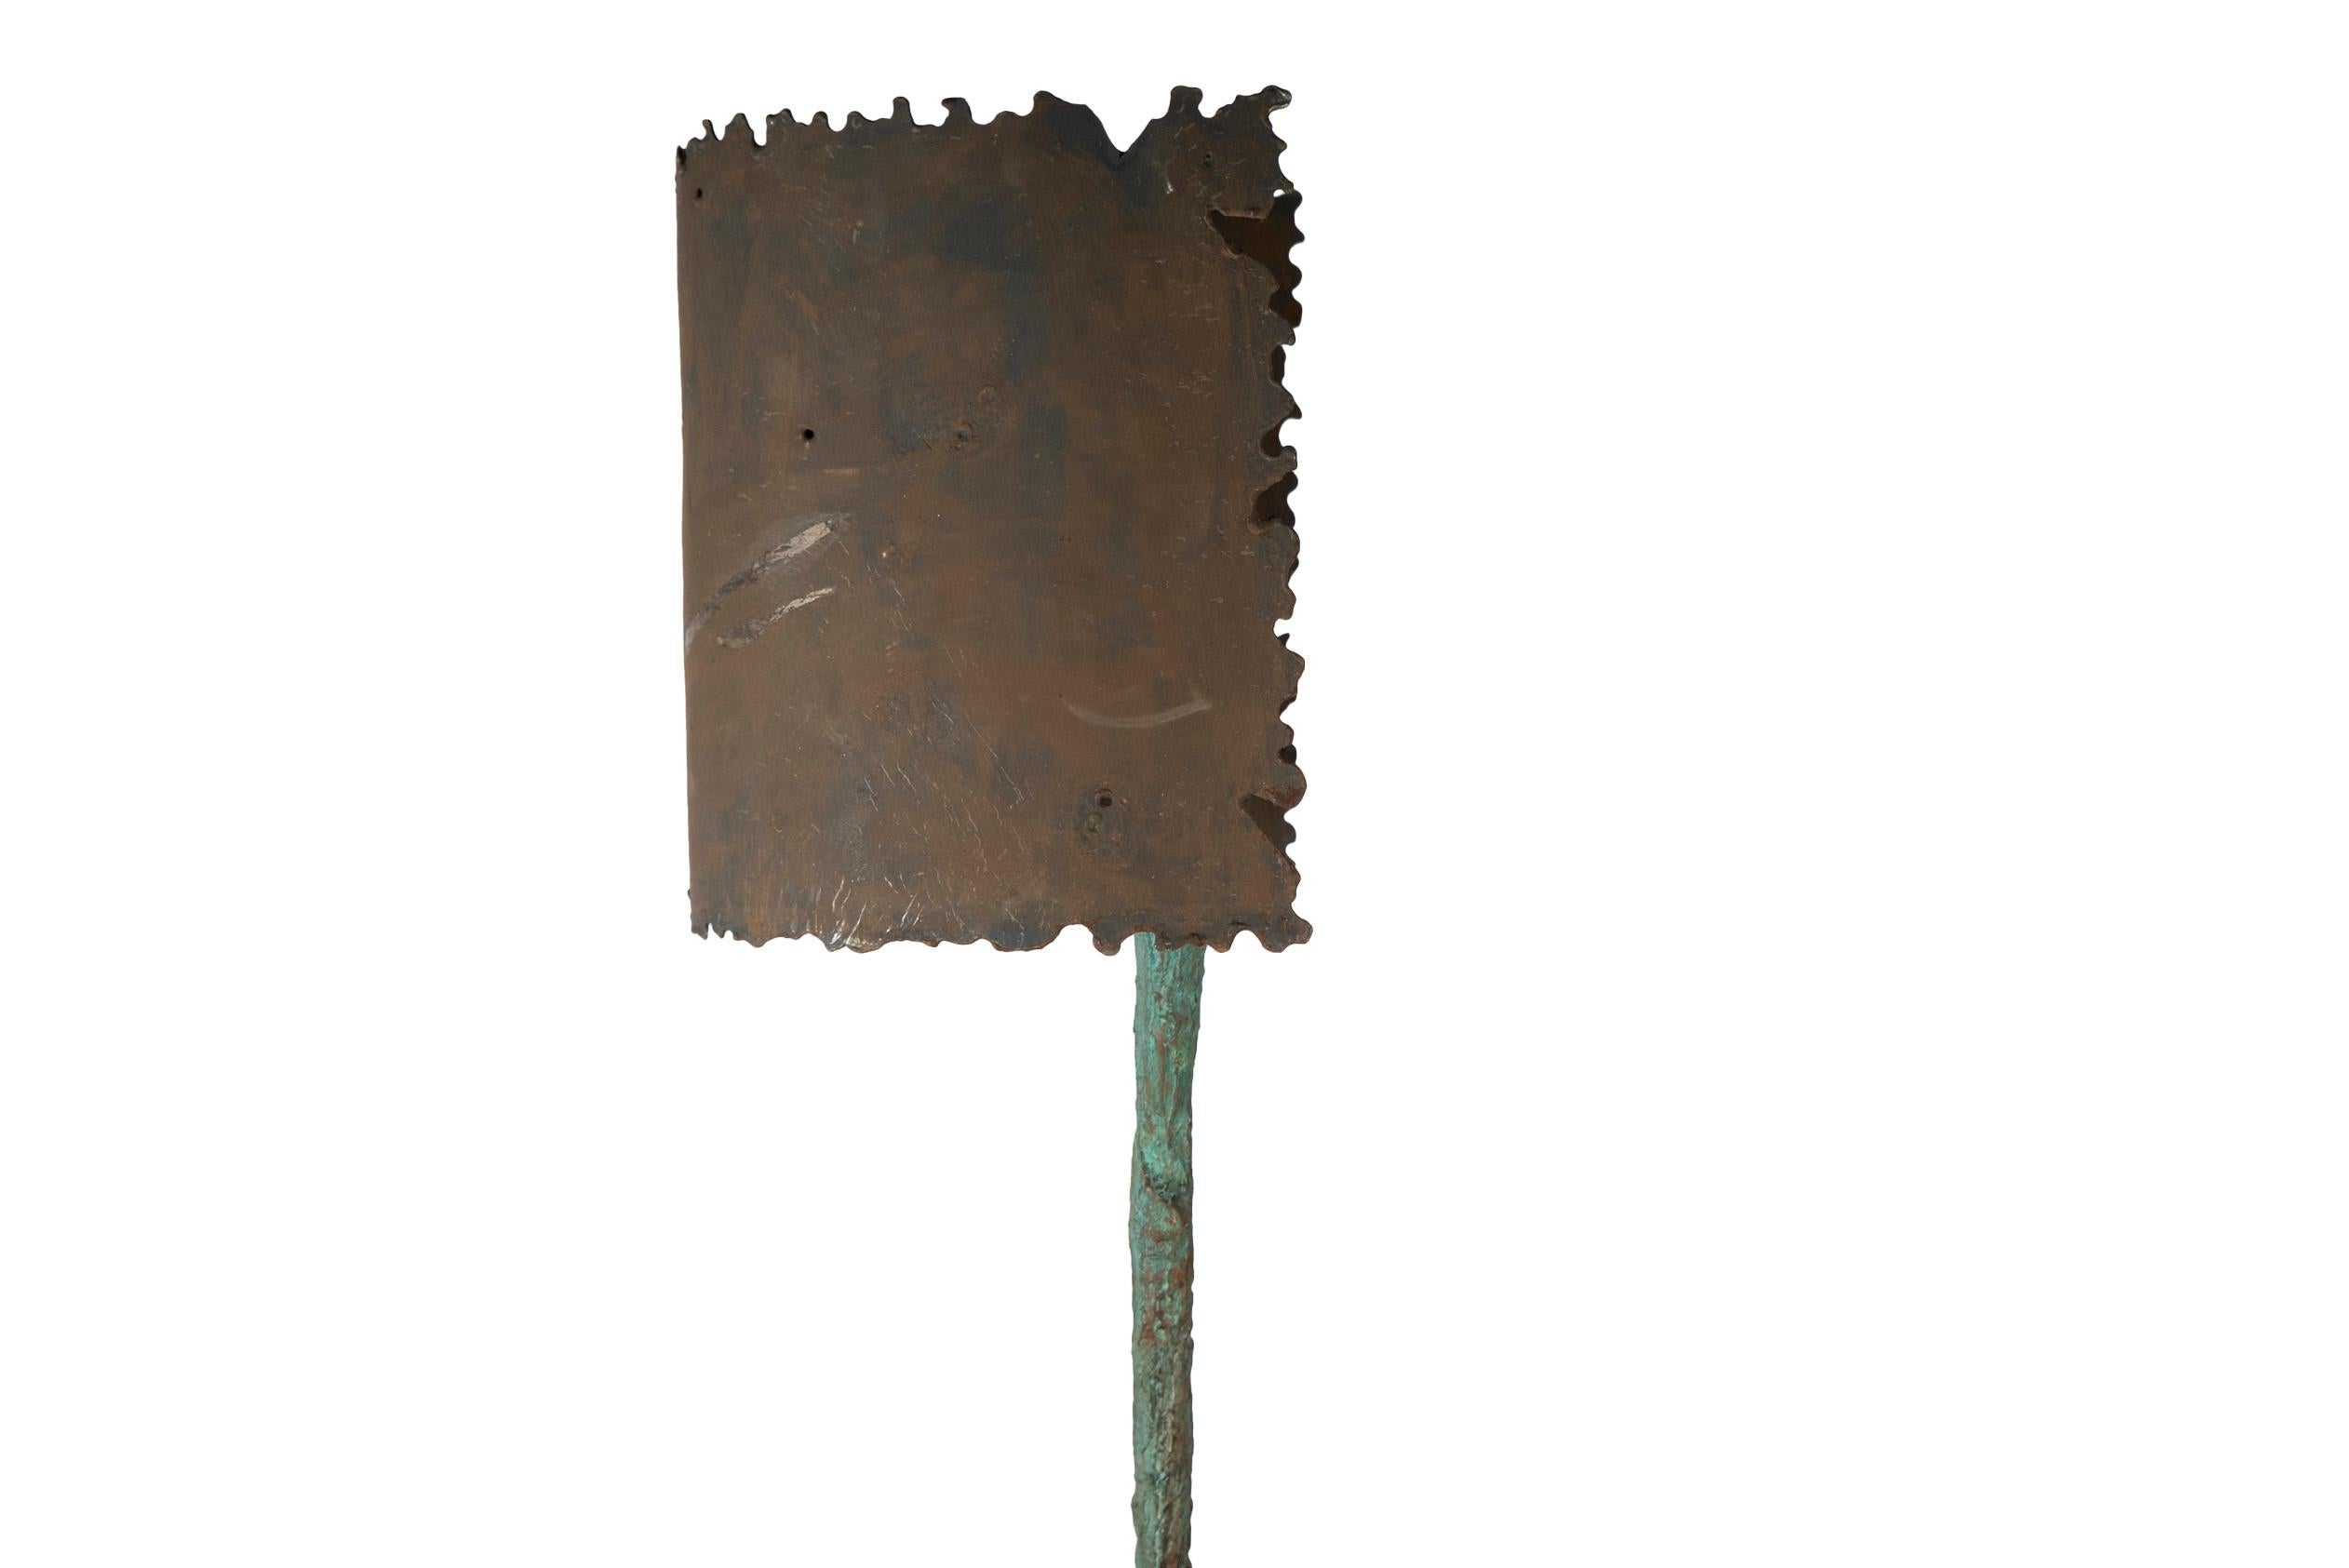 Attributed to Nadine Effront,
Bronze floor lamp,
Sheet metal lampshade,
circa 1980, France.
Measures: Height 188 cm, diameter 40 cm.